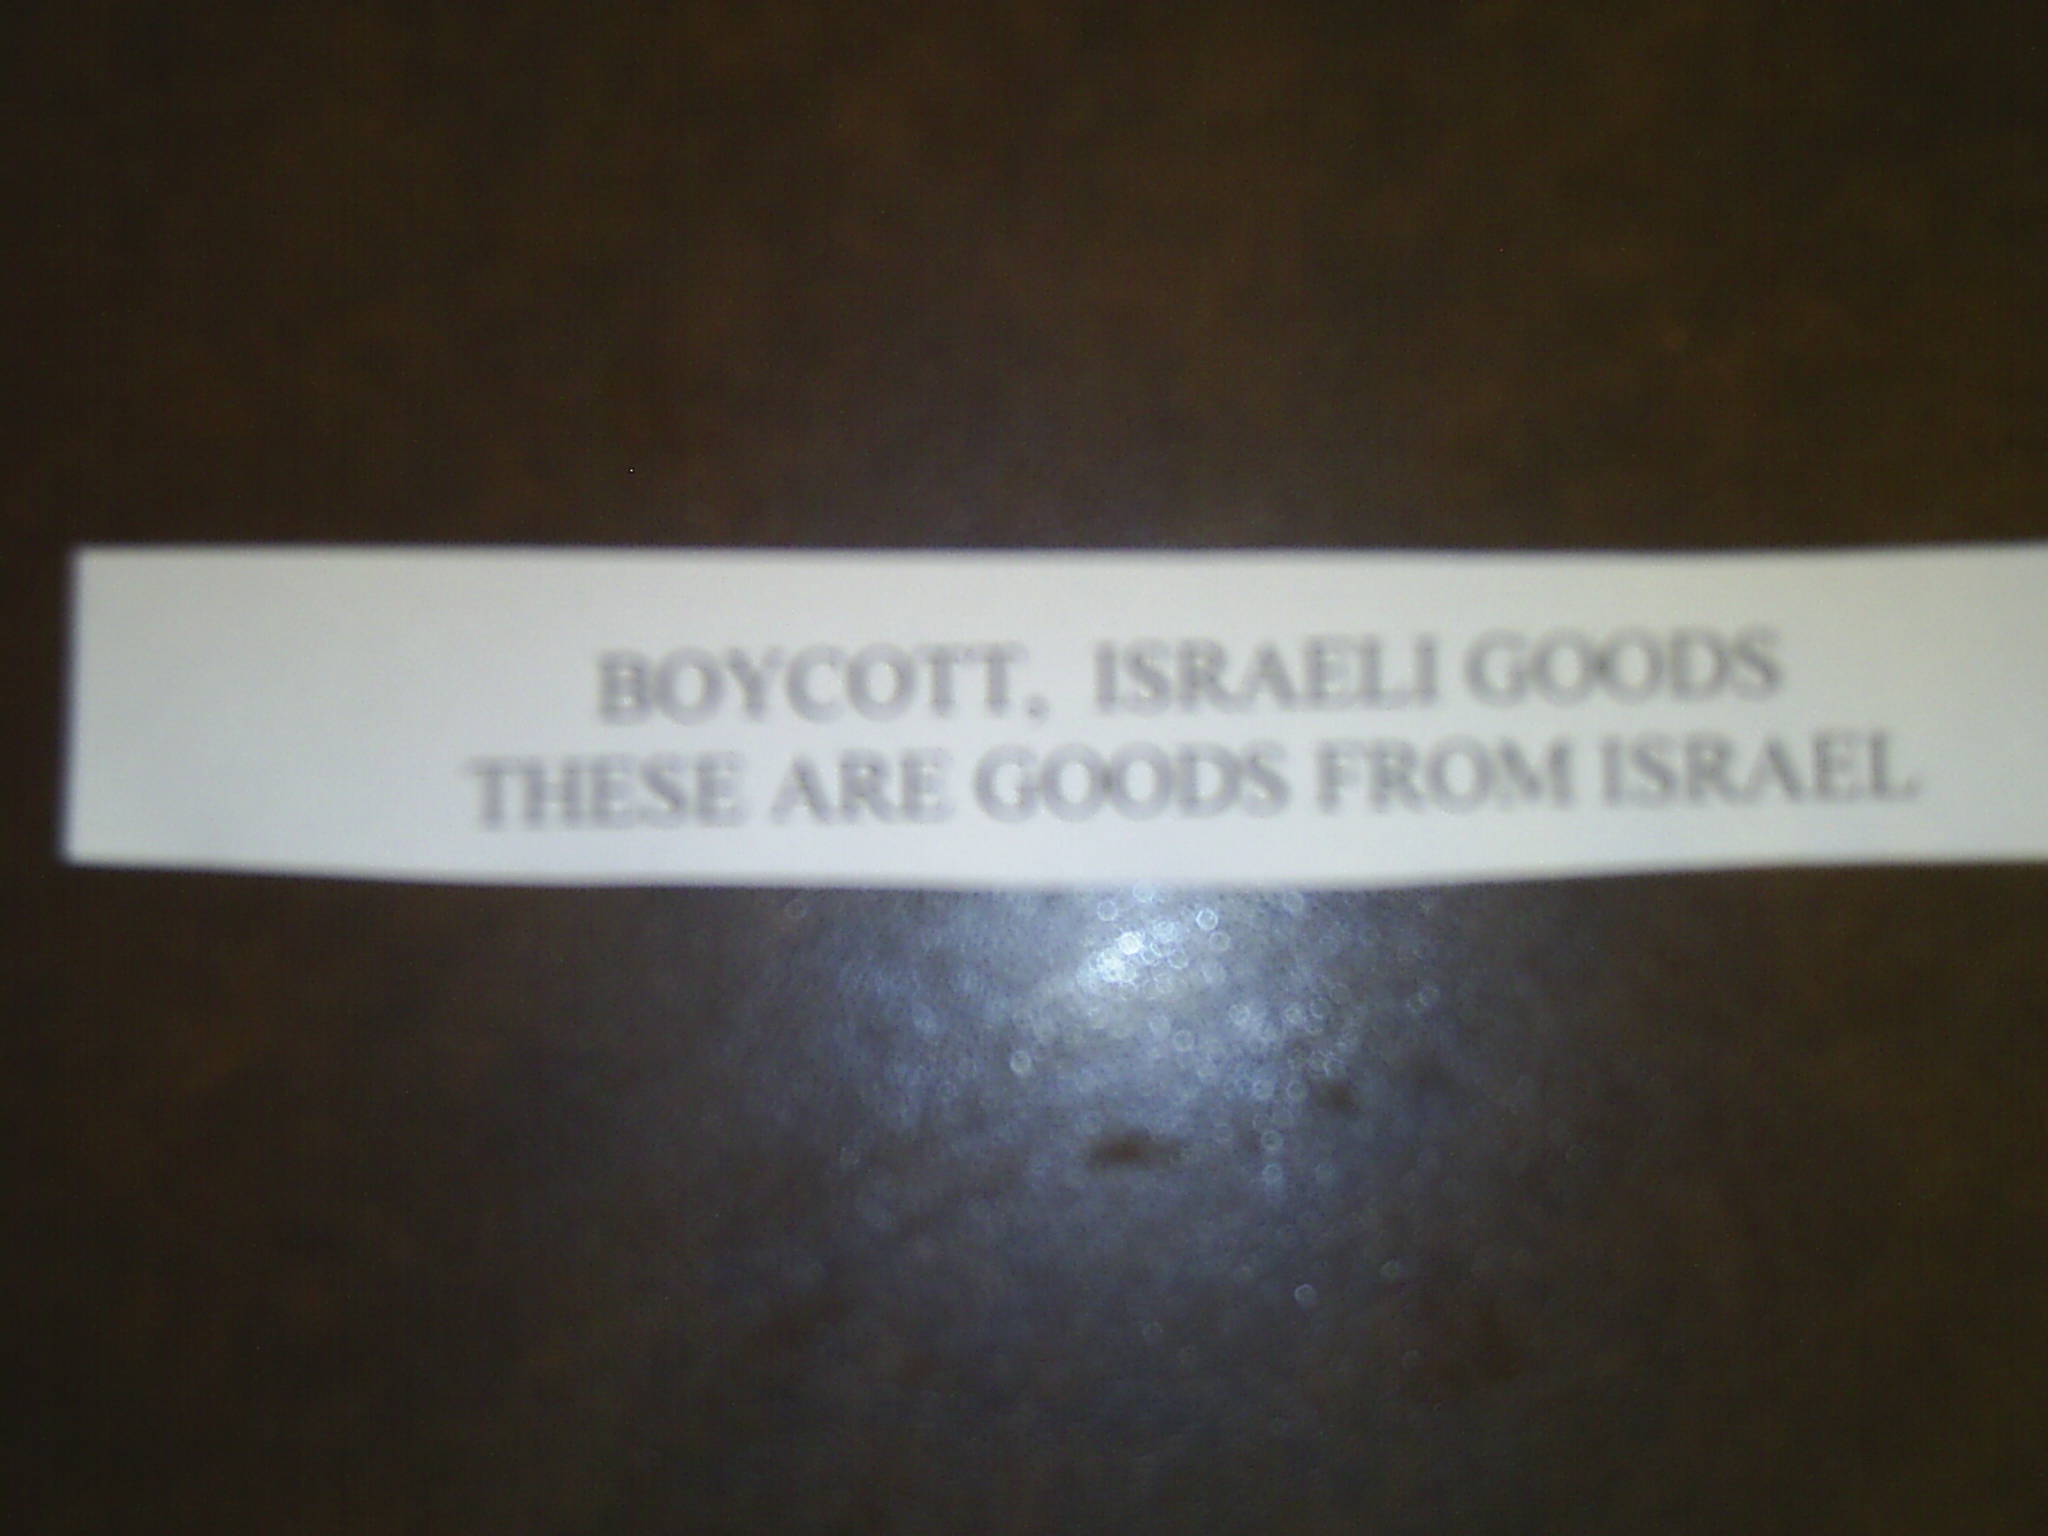 Boycott/these companys